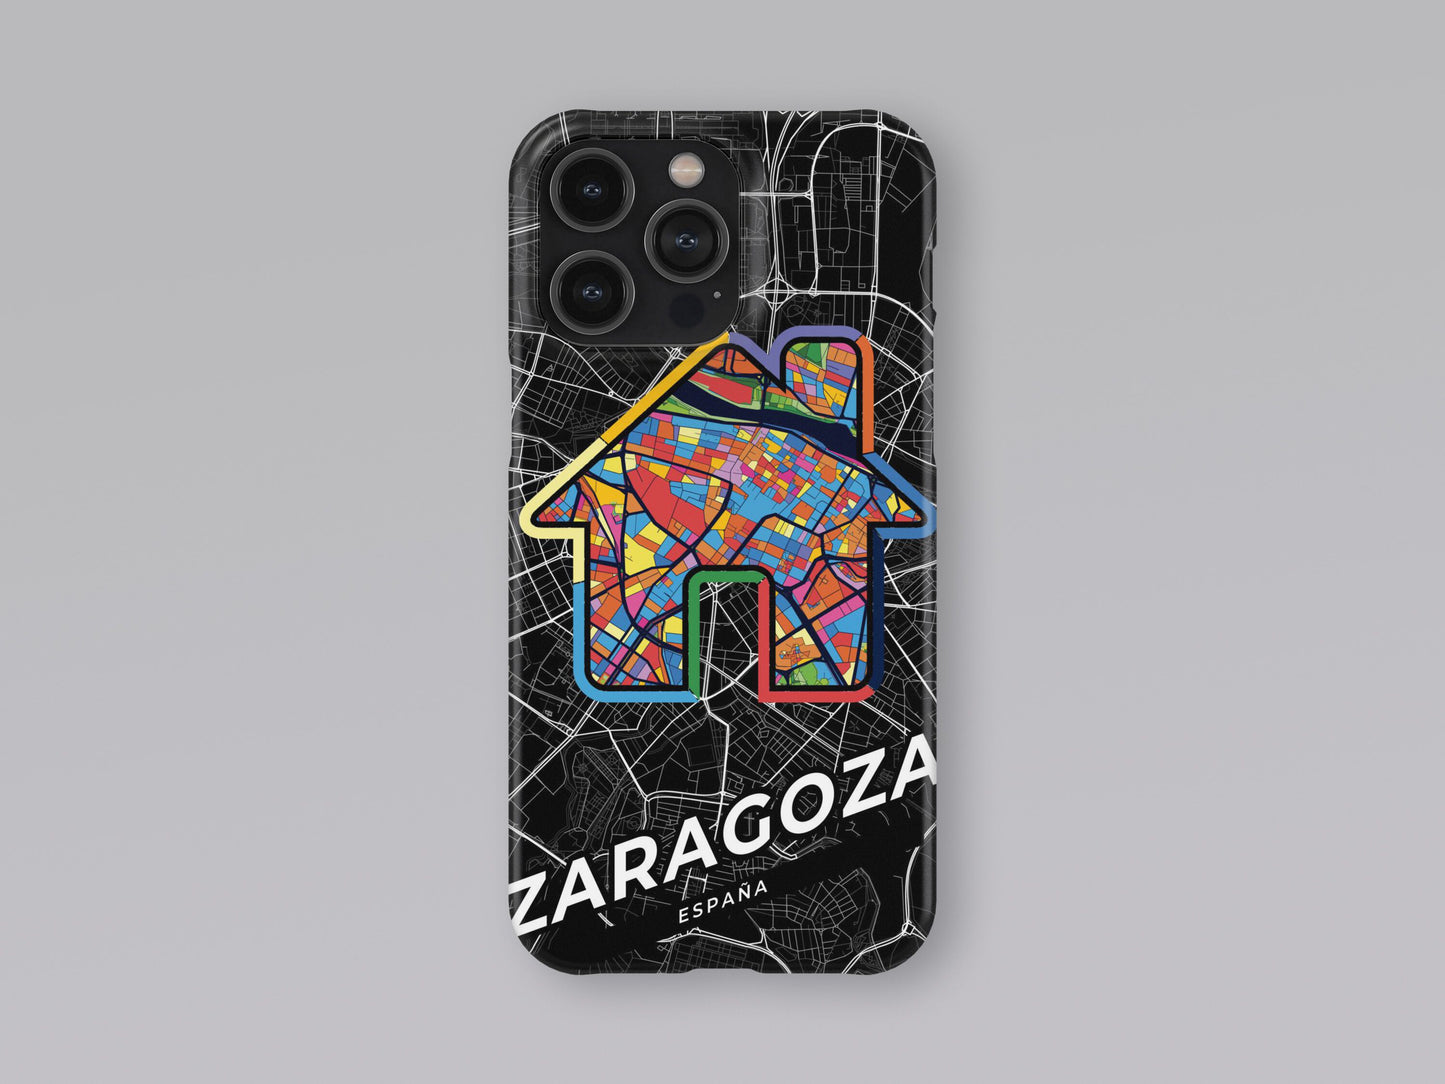 Zaragoza Spain slim phone case with colorful icon 3